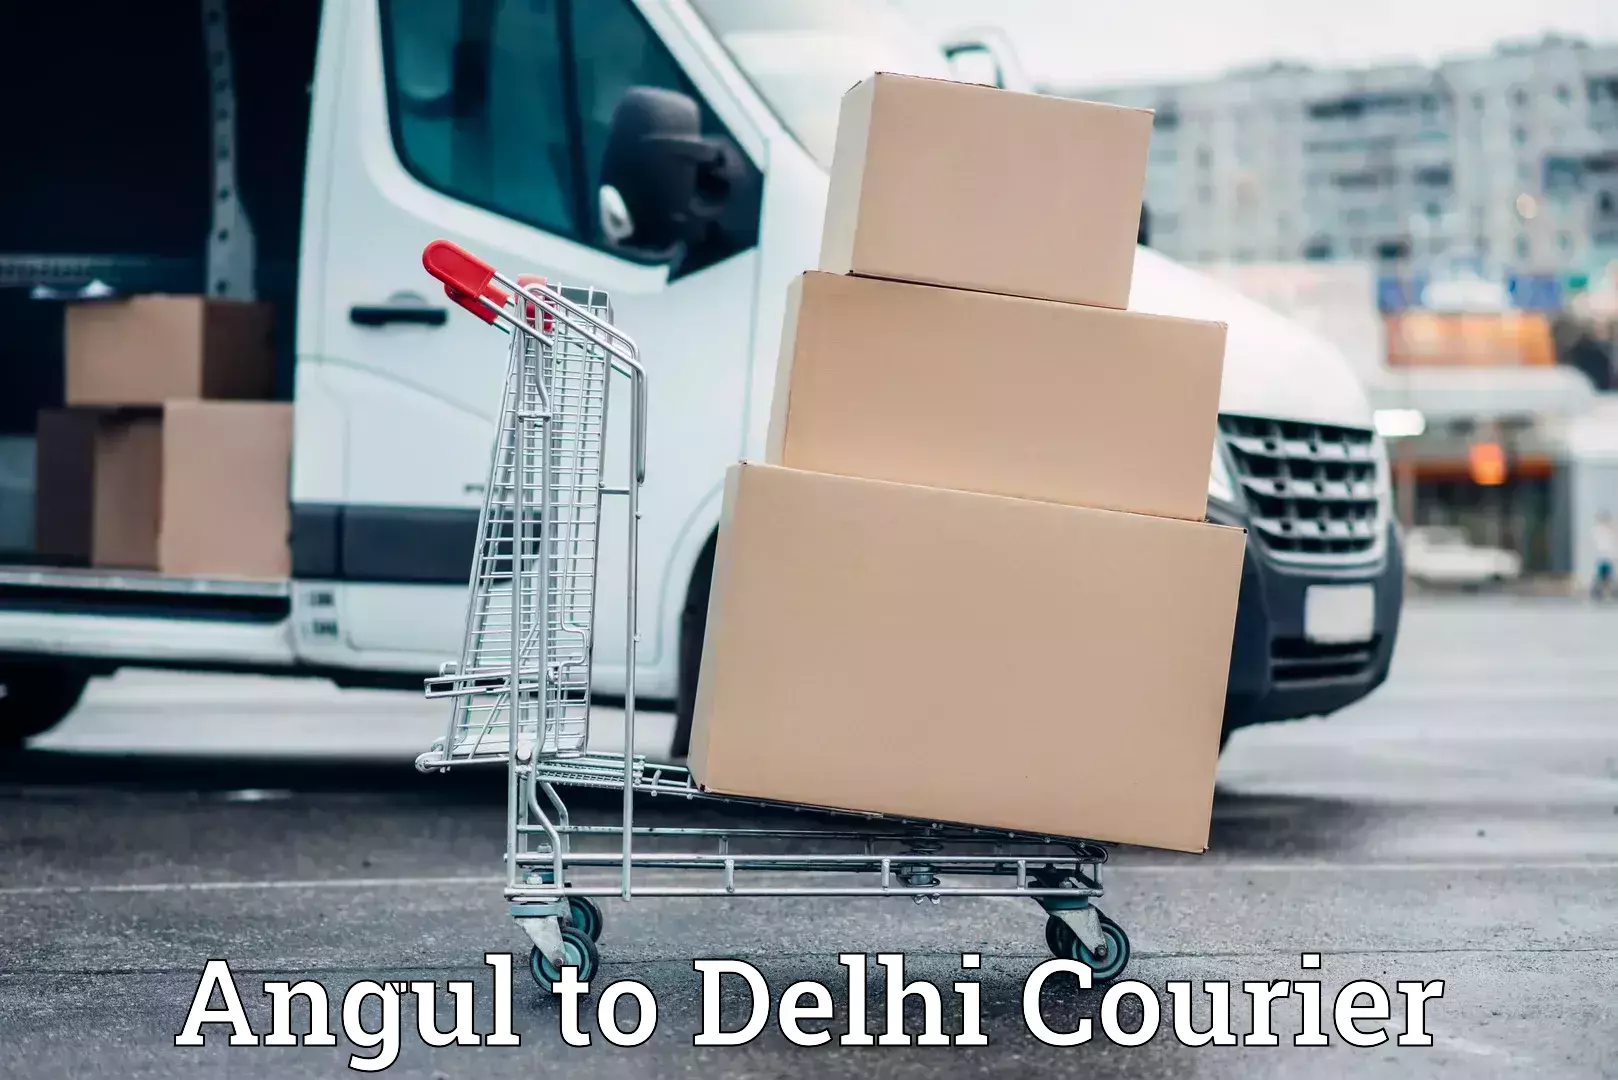 Professional furniture movers Angul to Delhi